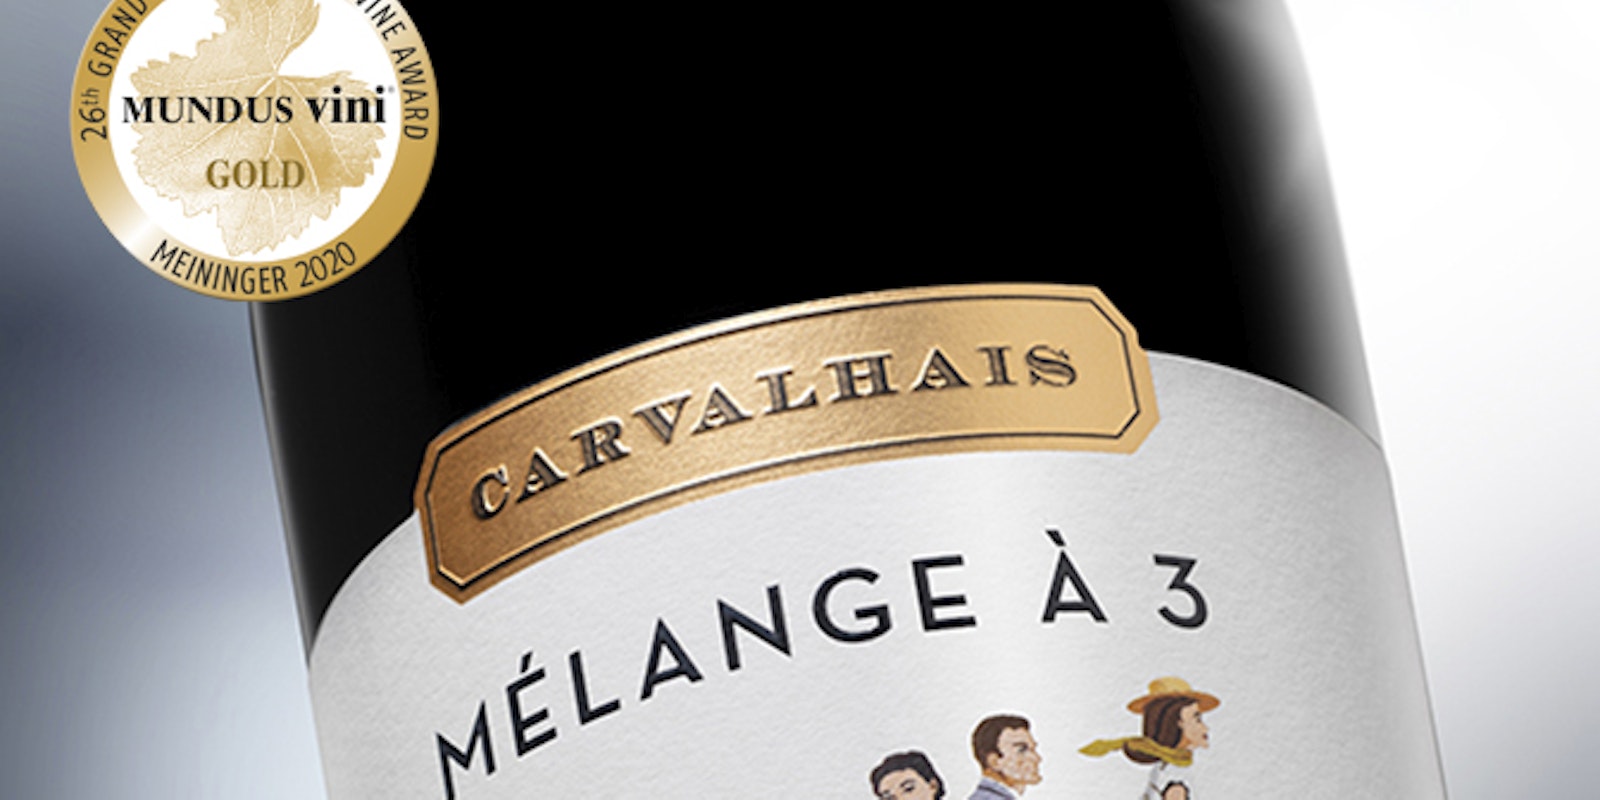 Gold Medal Awarded To Melange A 3 At The Mundus Vini Spring Tasting 2020